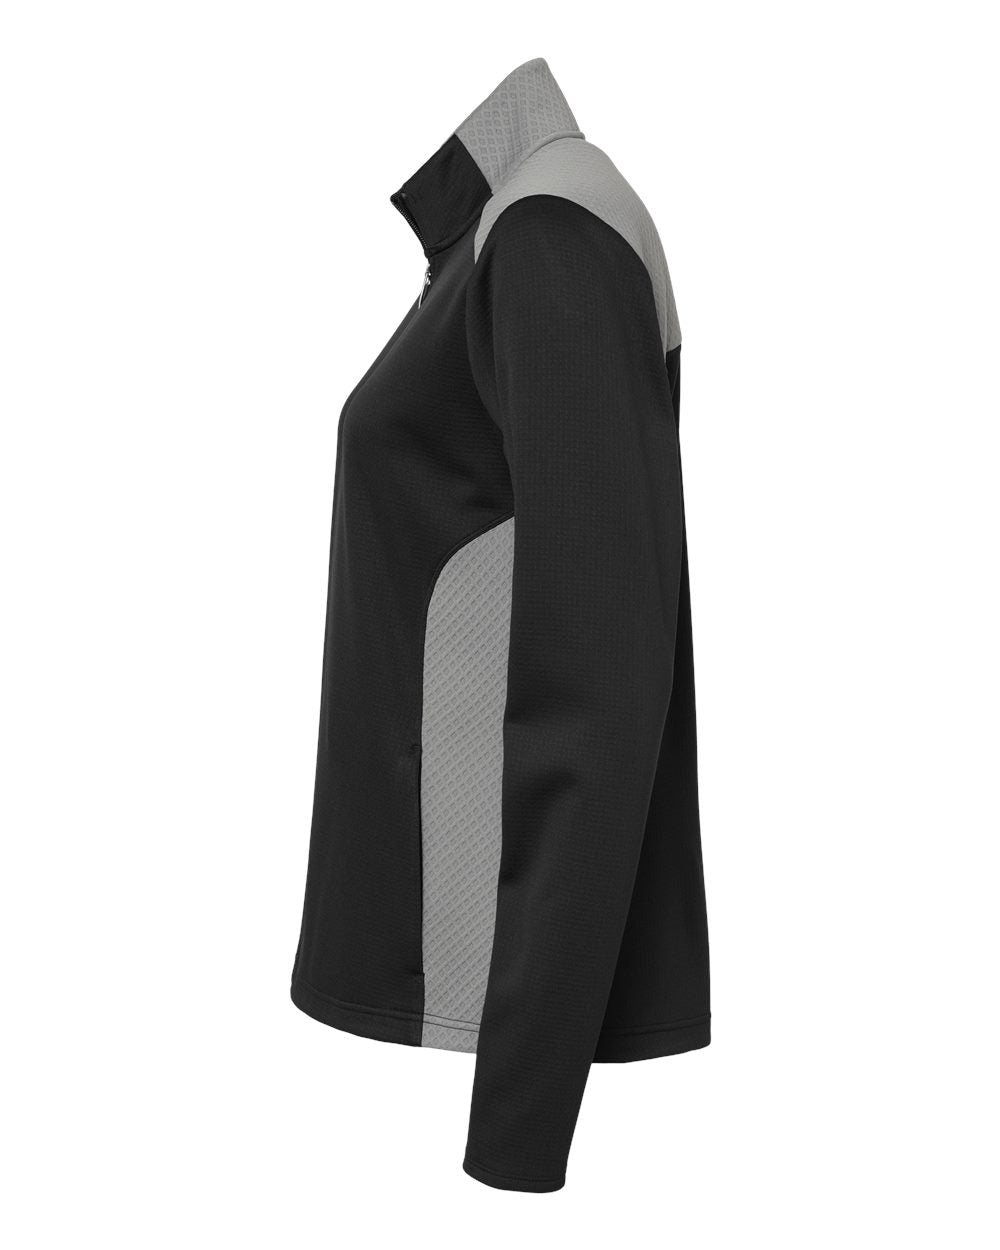 Adidas A529 Women's Textured Mixed Media Full-Zip Jacket #color_Black/ Grey Three